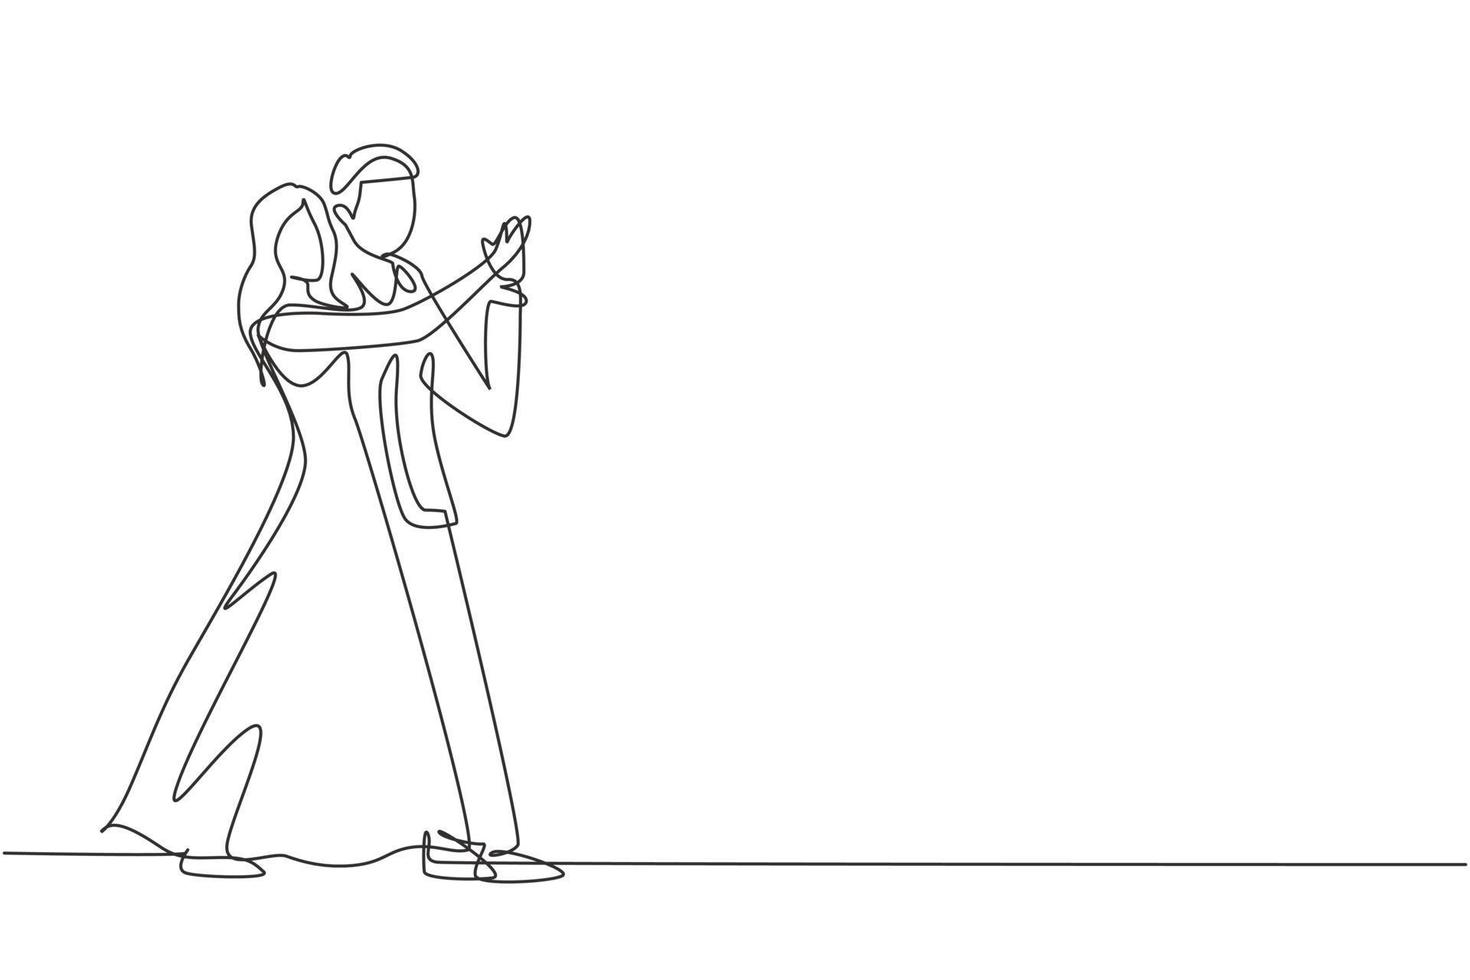 Continuous one line drawing romantic man and woman professional dancer couple dancing tango, waltz dances on dancing contest dancefloor. Happy life. Single line draw design vector graphic illustration